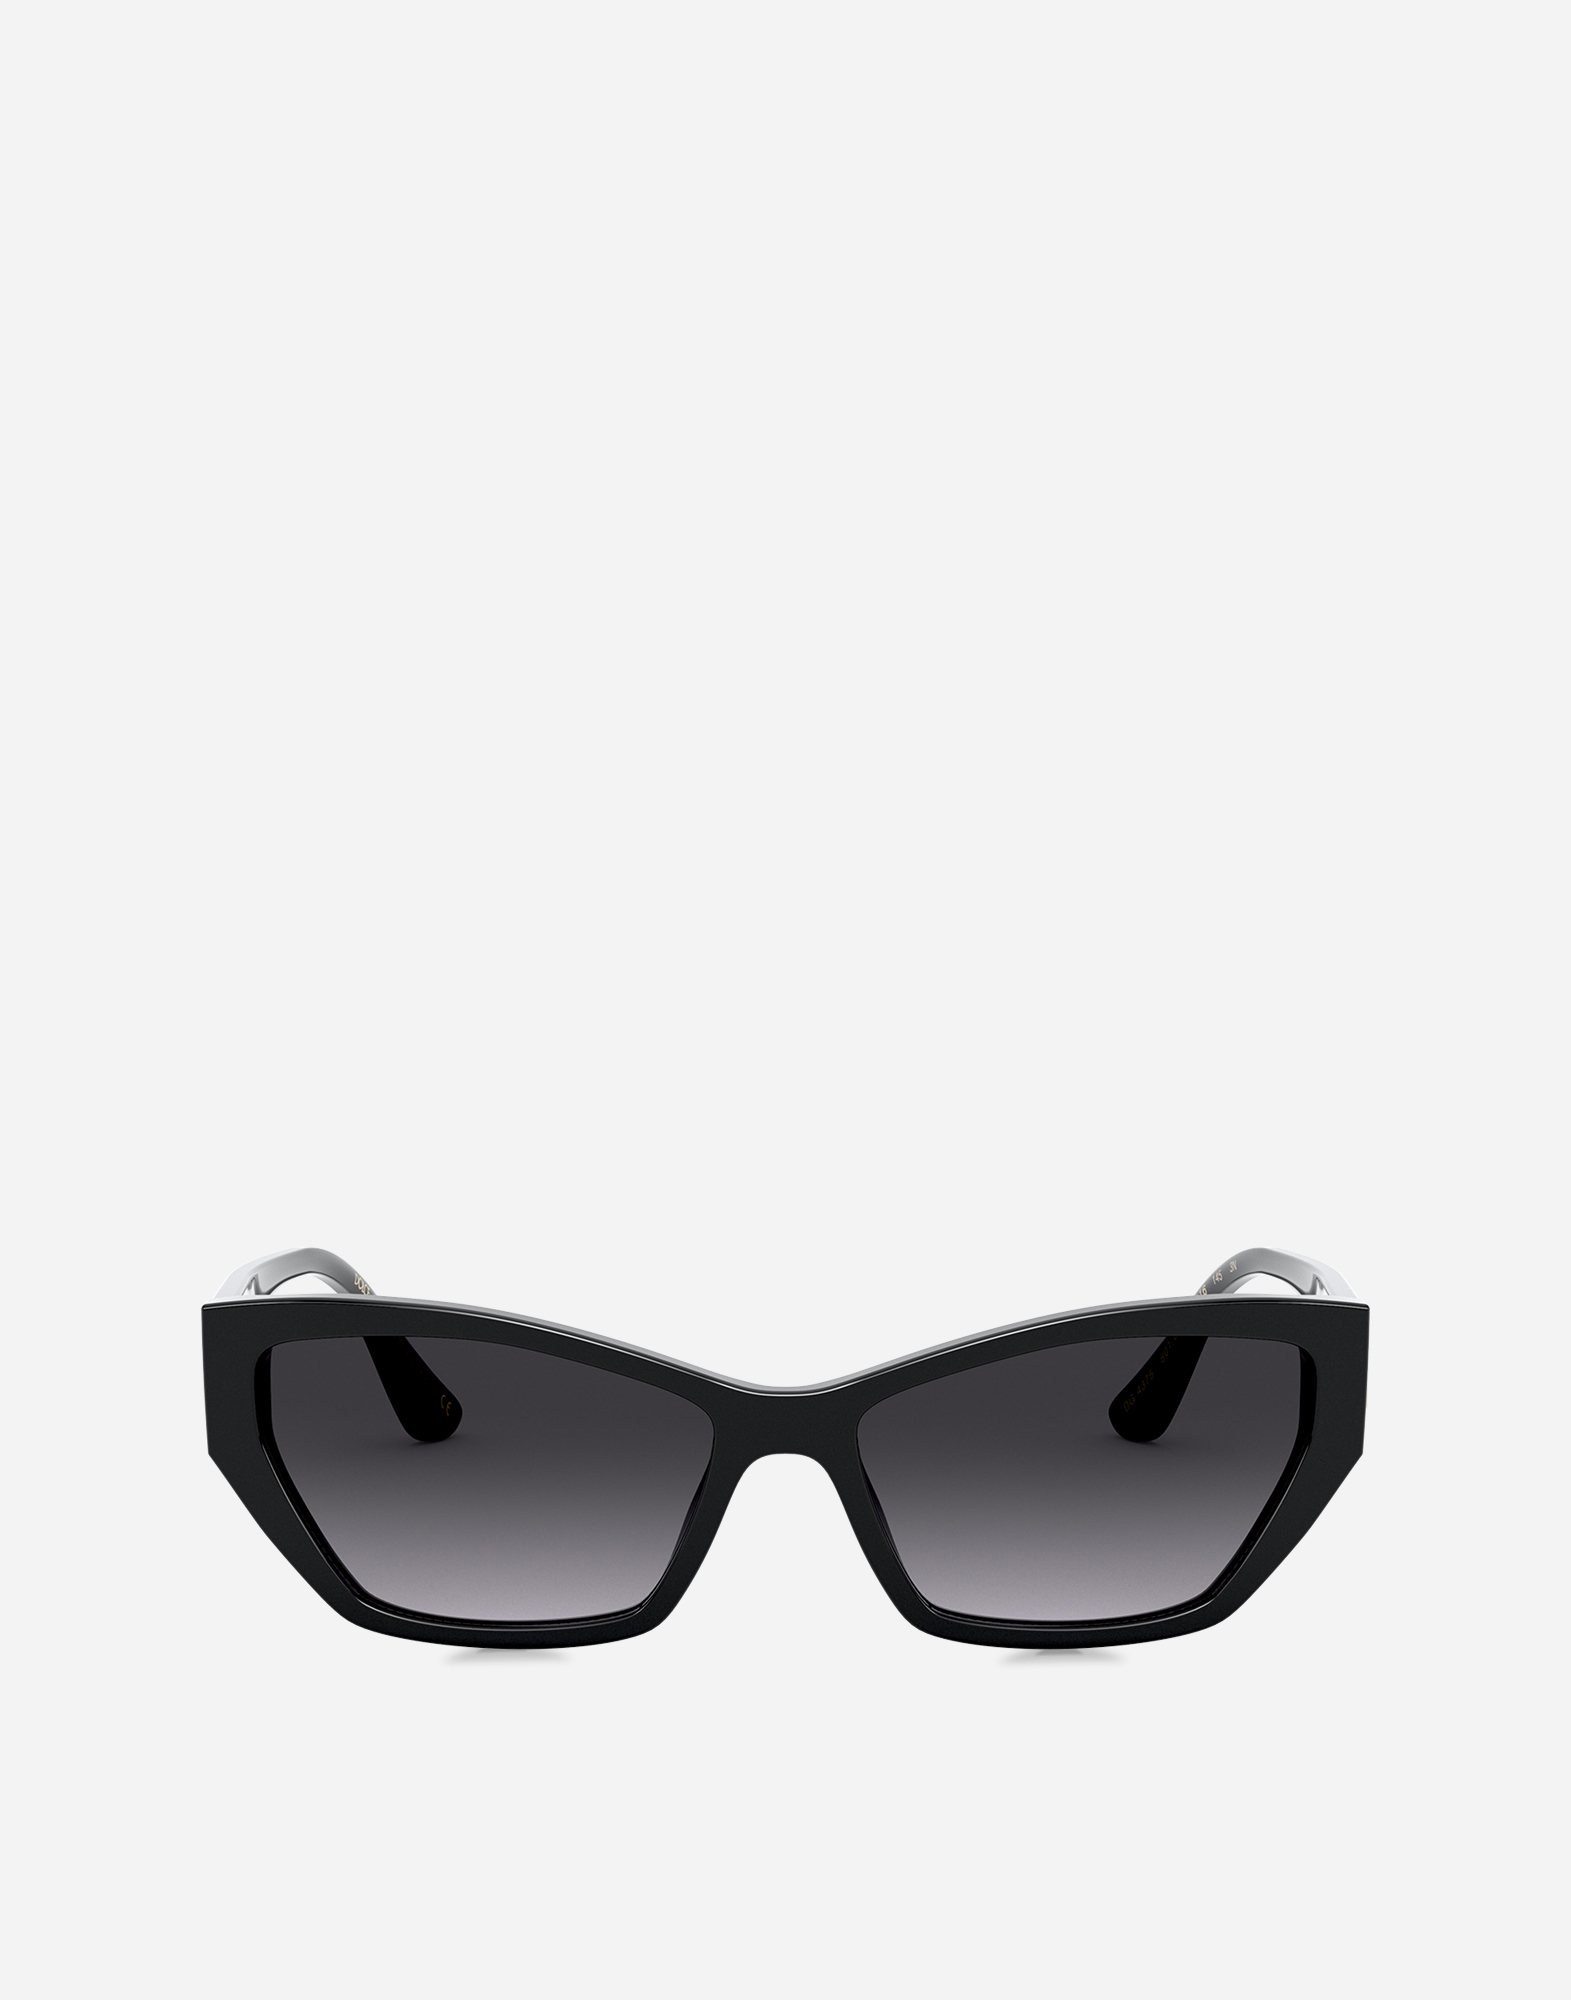 Dolce & Gabbana DG MONOGRAM DG 4377 BLACK/GREY SHADED 54/19/145 women  Sunglasses : : Clothing, Shoes & Accessories